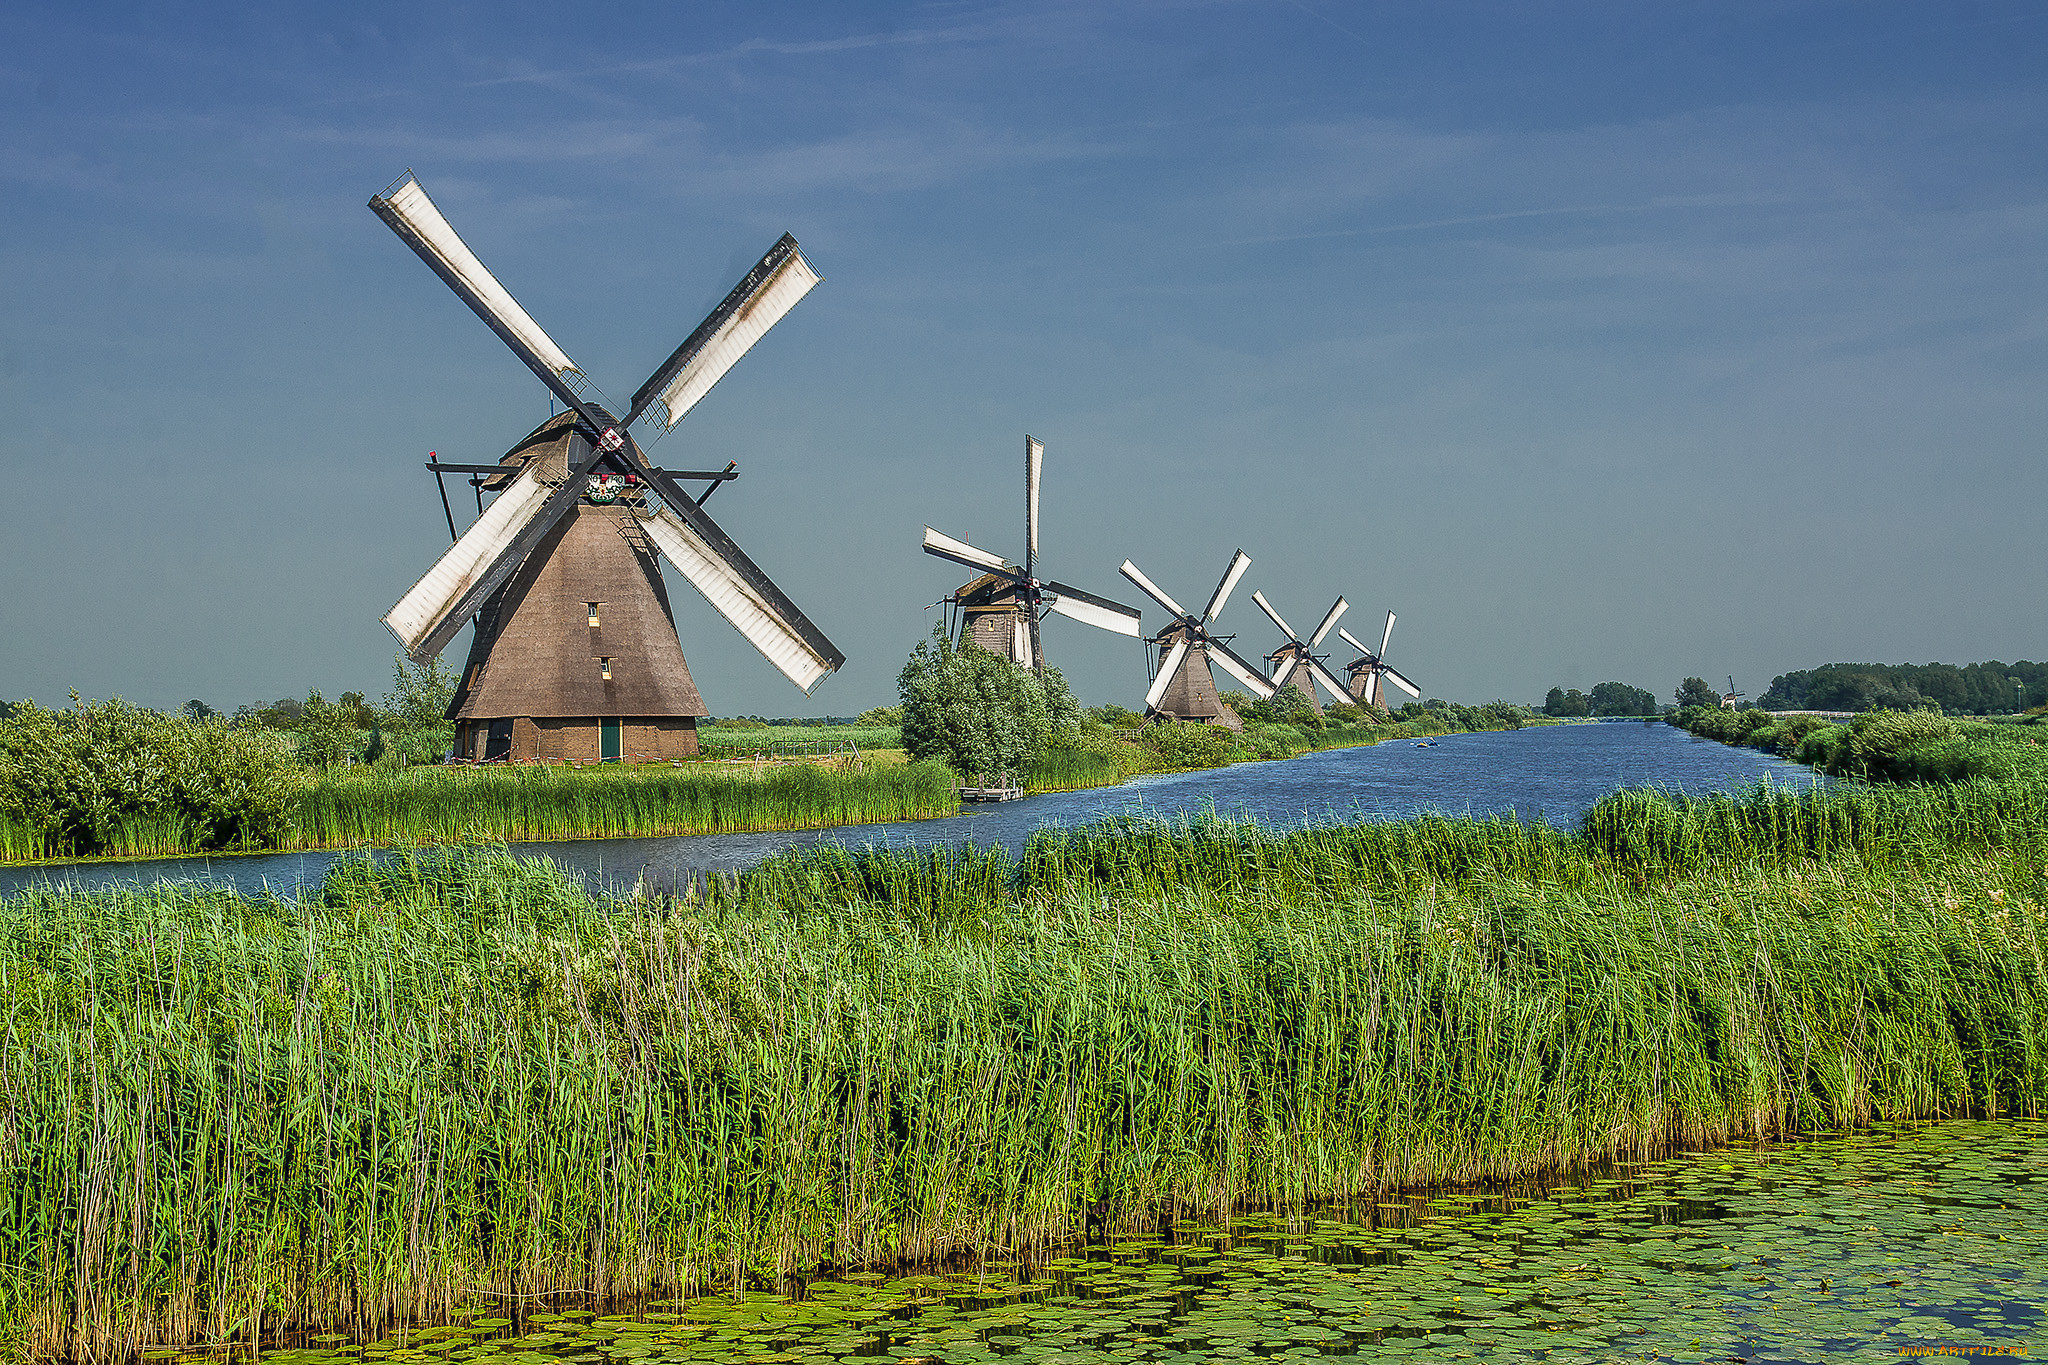 Земля ветряных мельниц. Ветряные мельницы в Нидерландах. Мельница Геншин. Багаевская мельница.